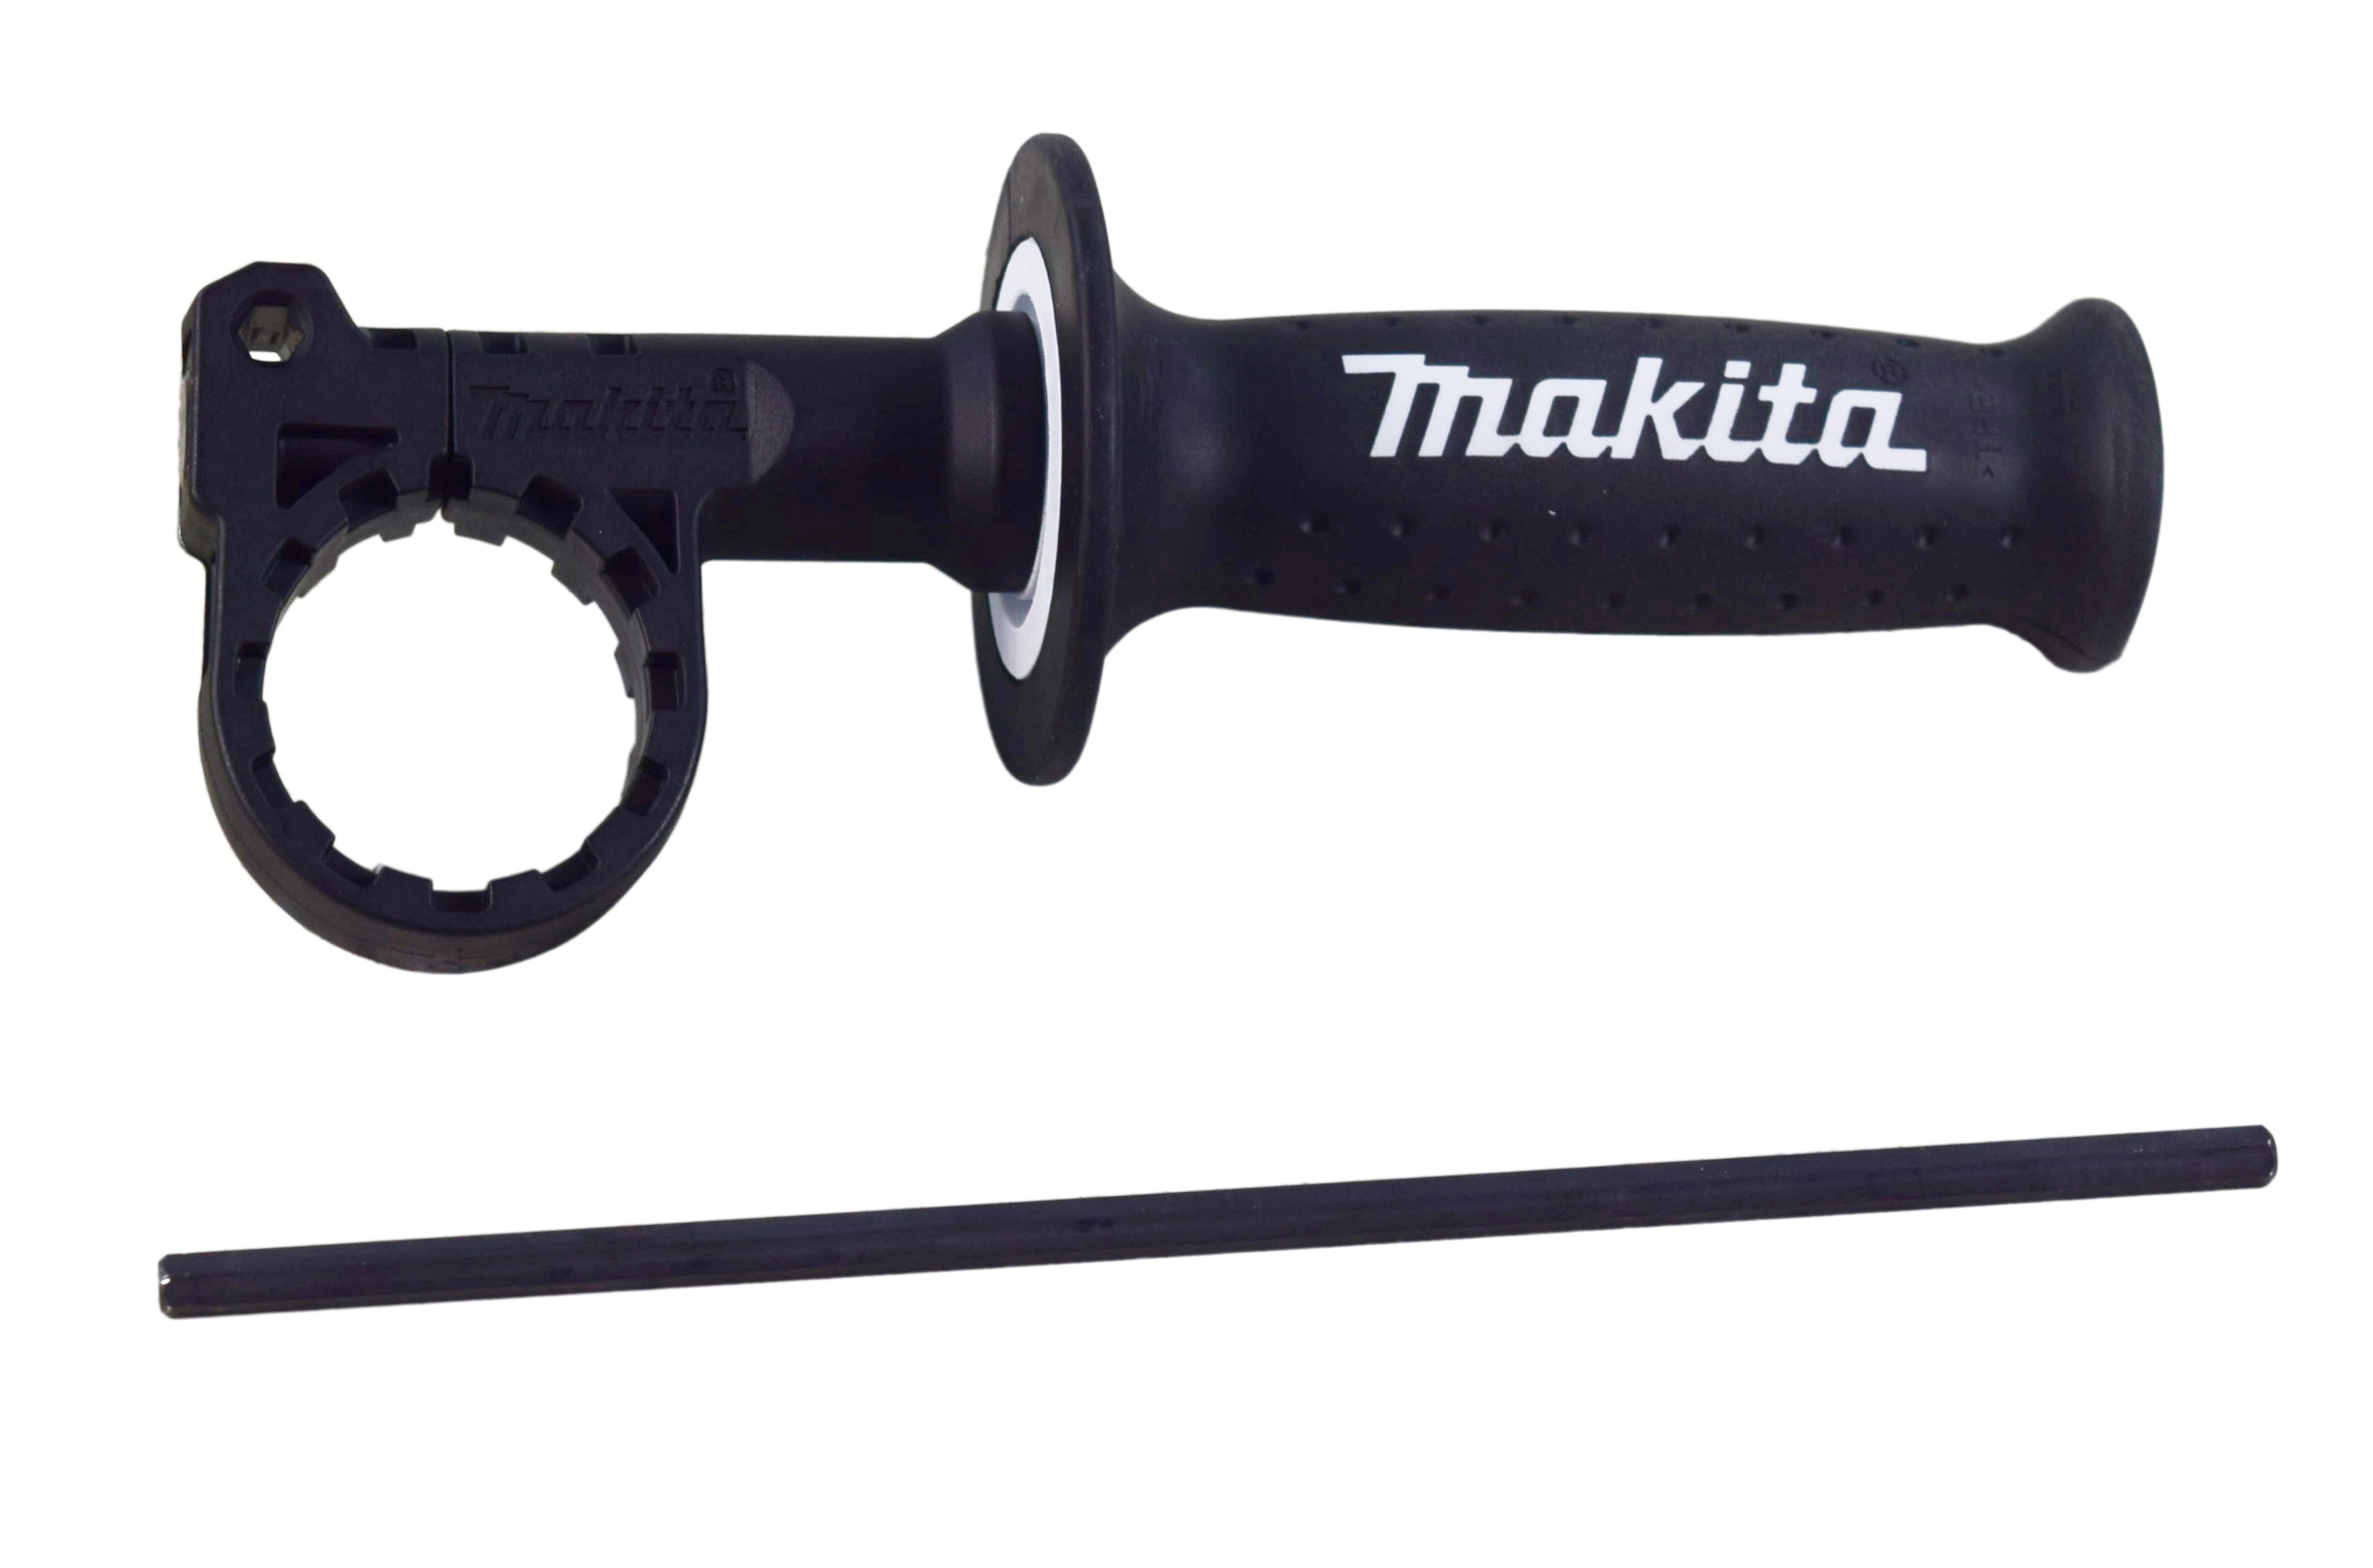 Makita XRH04Z 18V Lithium-Ion Cordless 7/8" Rotary Hammer (Bare Tool)